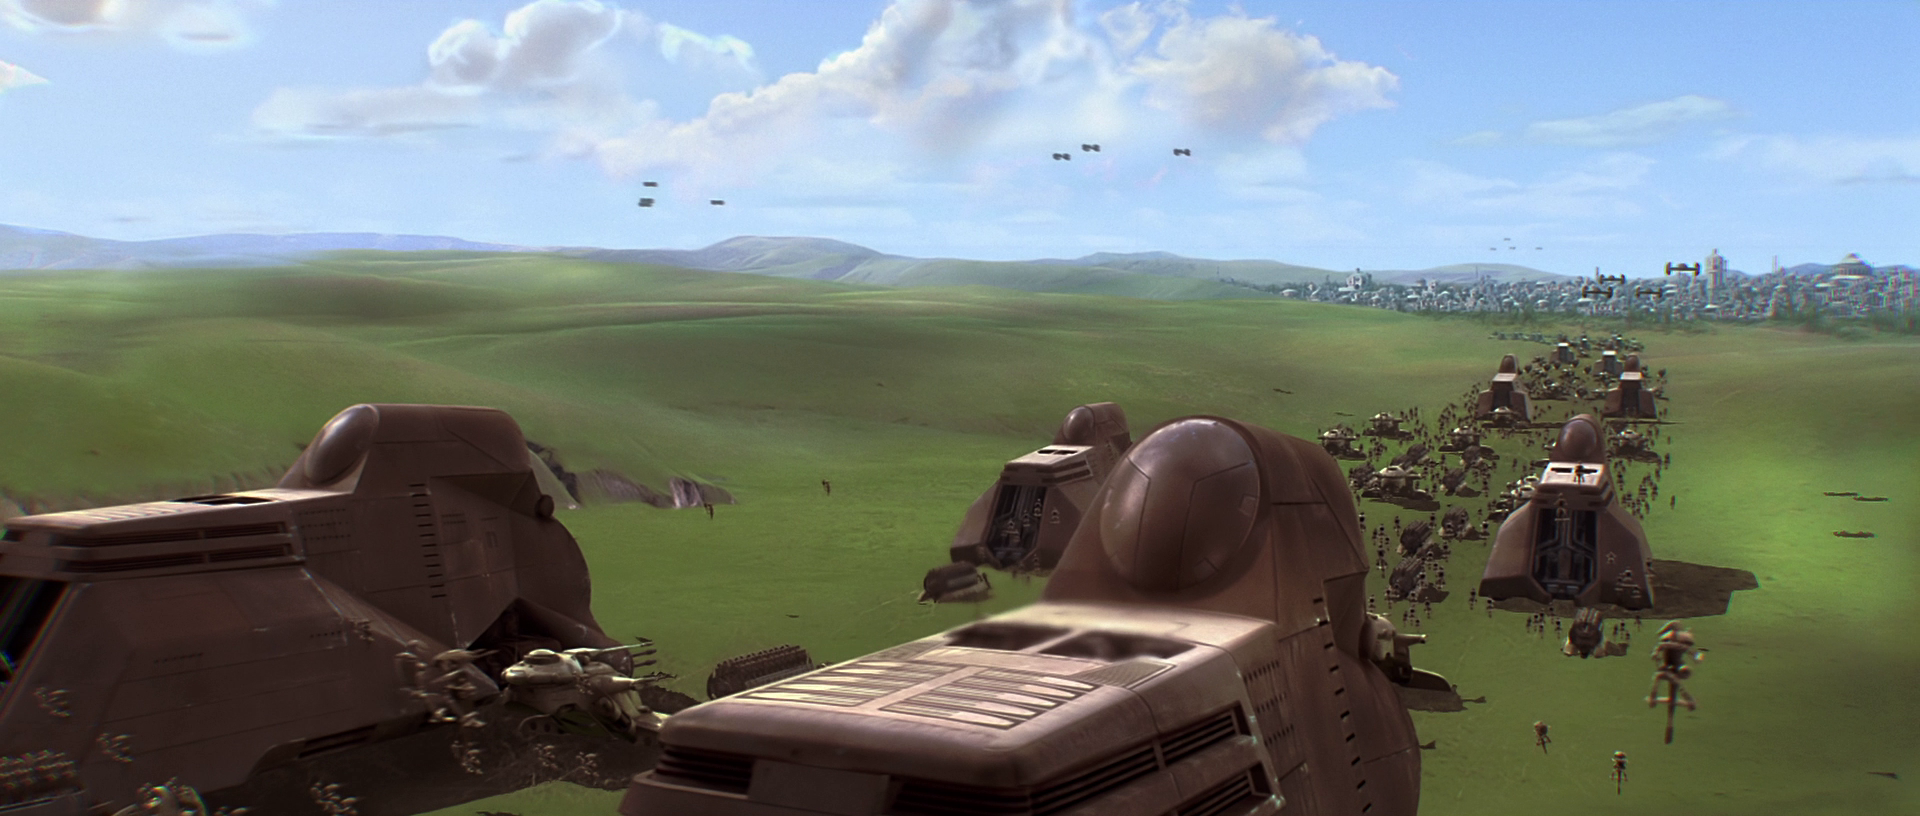 star wars multi troop transport droid carrier